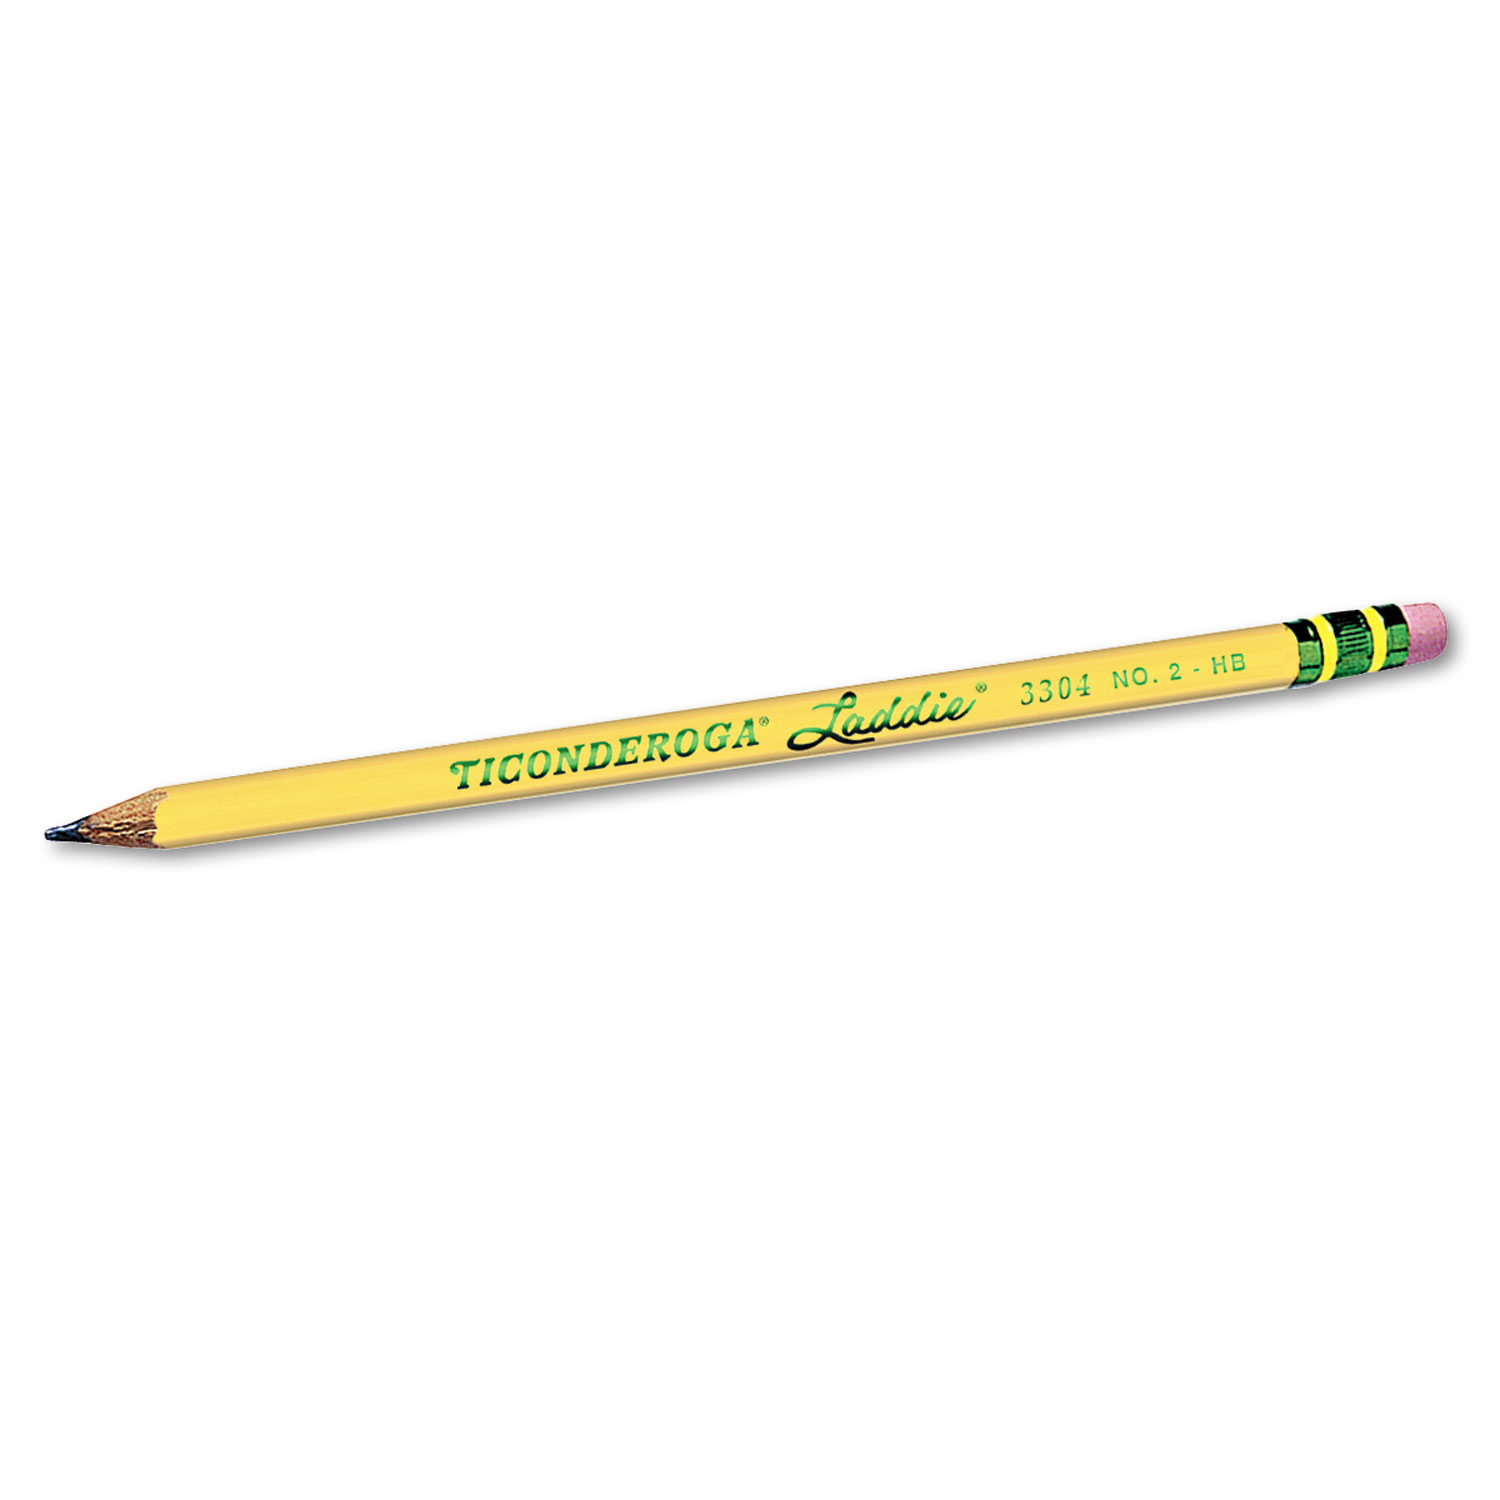  Dixon 13304 Ticonderoga Laddie Woodcase Pencil with Microban Protection, HB (#2), Black Lead, Yellow Barrel, Dozen (DIX13304) 